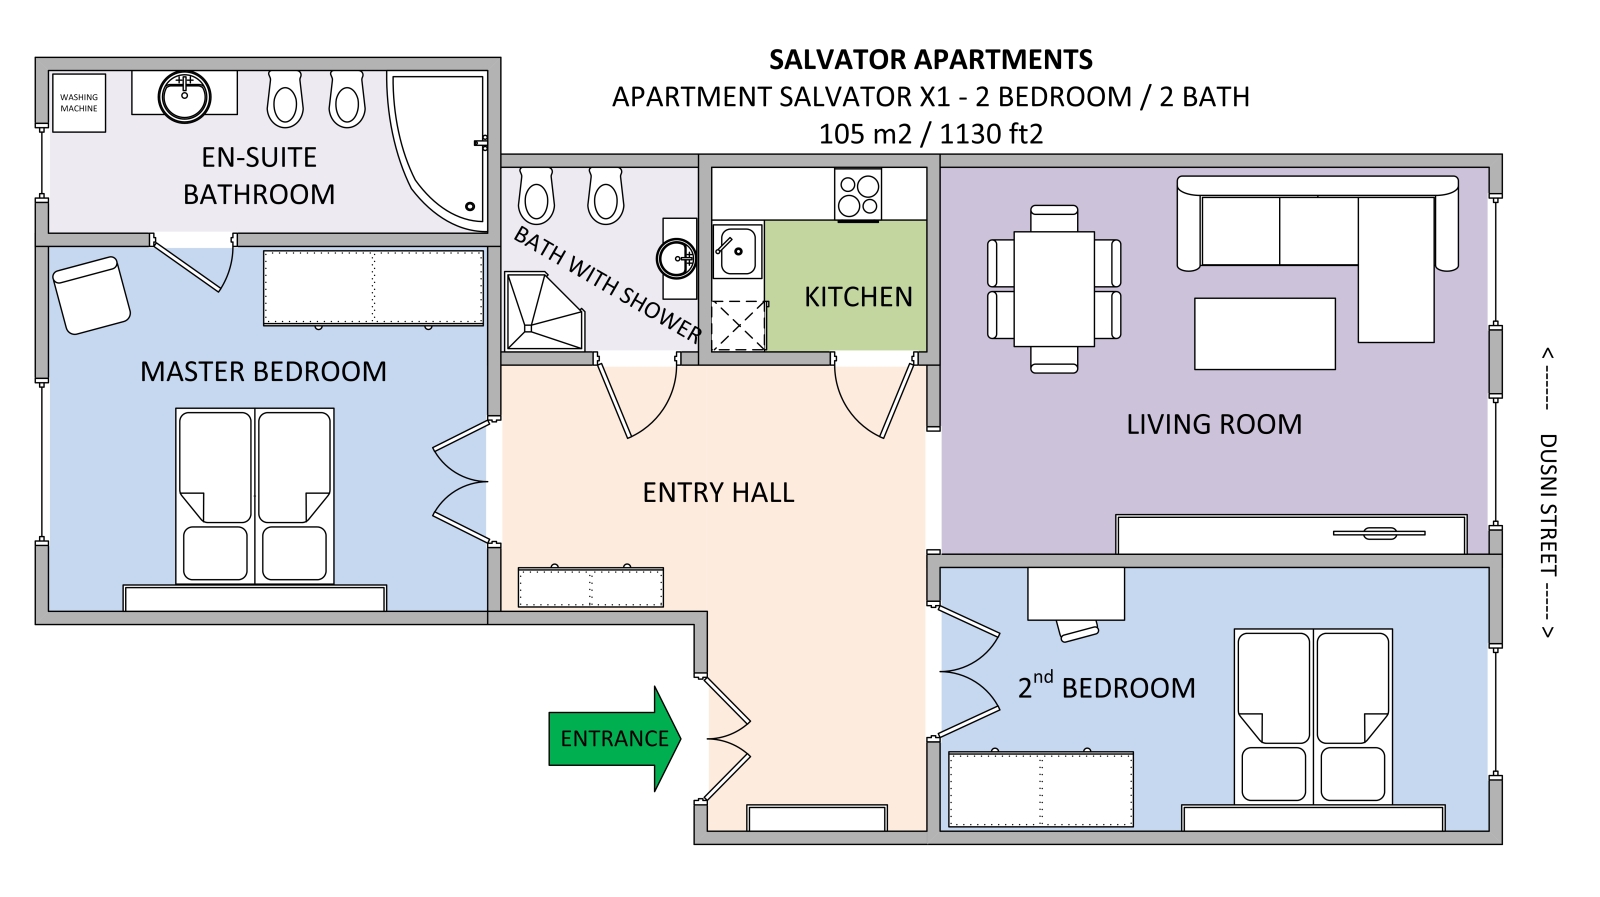 Floorplan of apartment x1 in Salvator Apartments residence in Prague